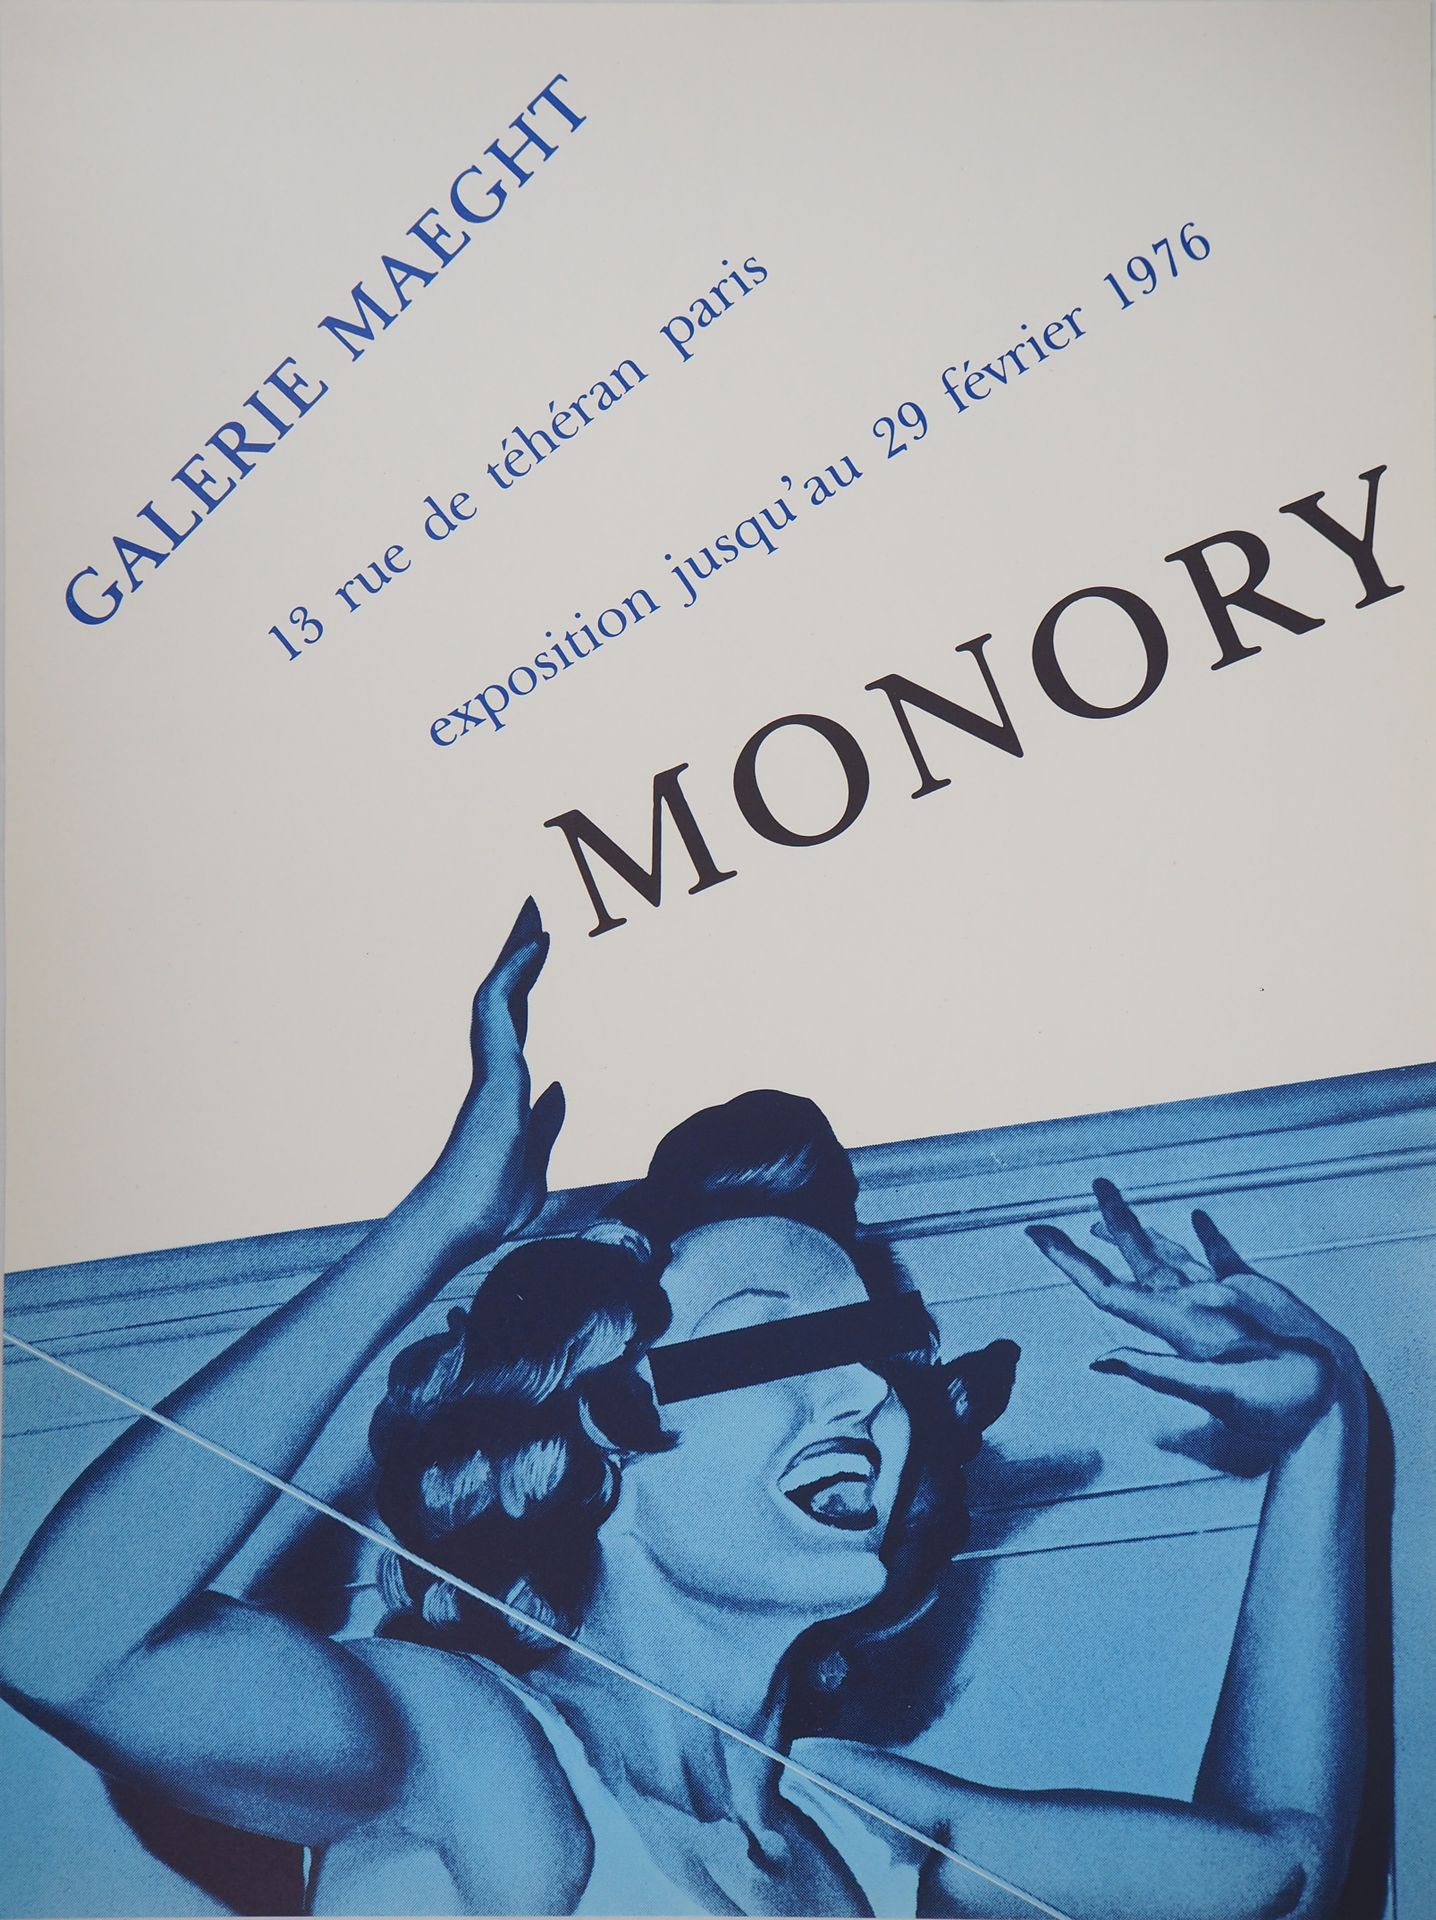 Jacques MONORY 雅克-莫诺里

惊讶的女孩, 1976

原创复古石版画海报（直接色调印刷

纸上60 x 45厘米

1976年迈格特画廊为艺术&hellip;